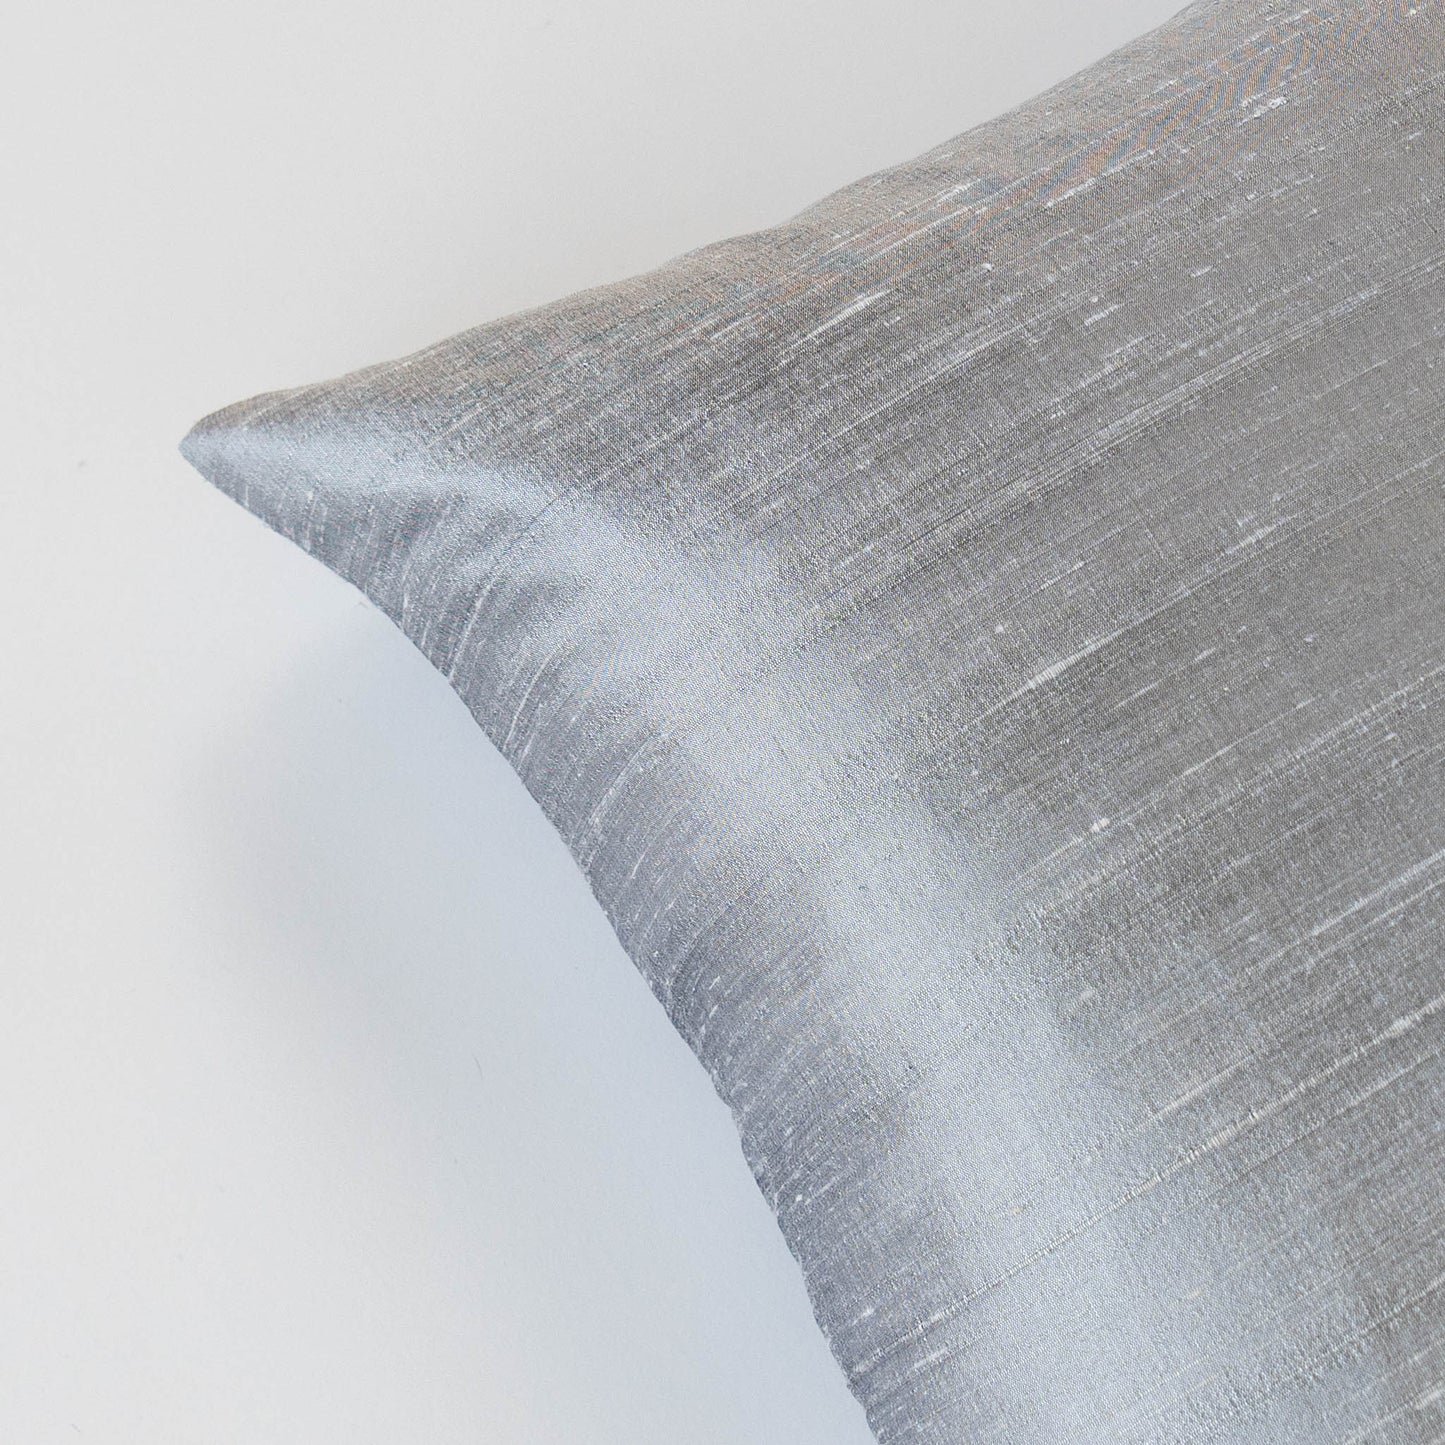 Dupioni Silk Throw Pillow Cover | Silver